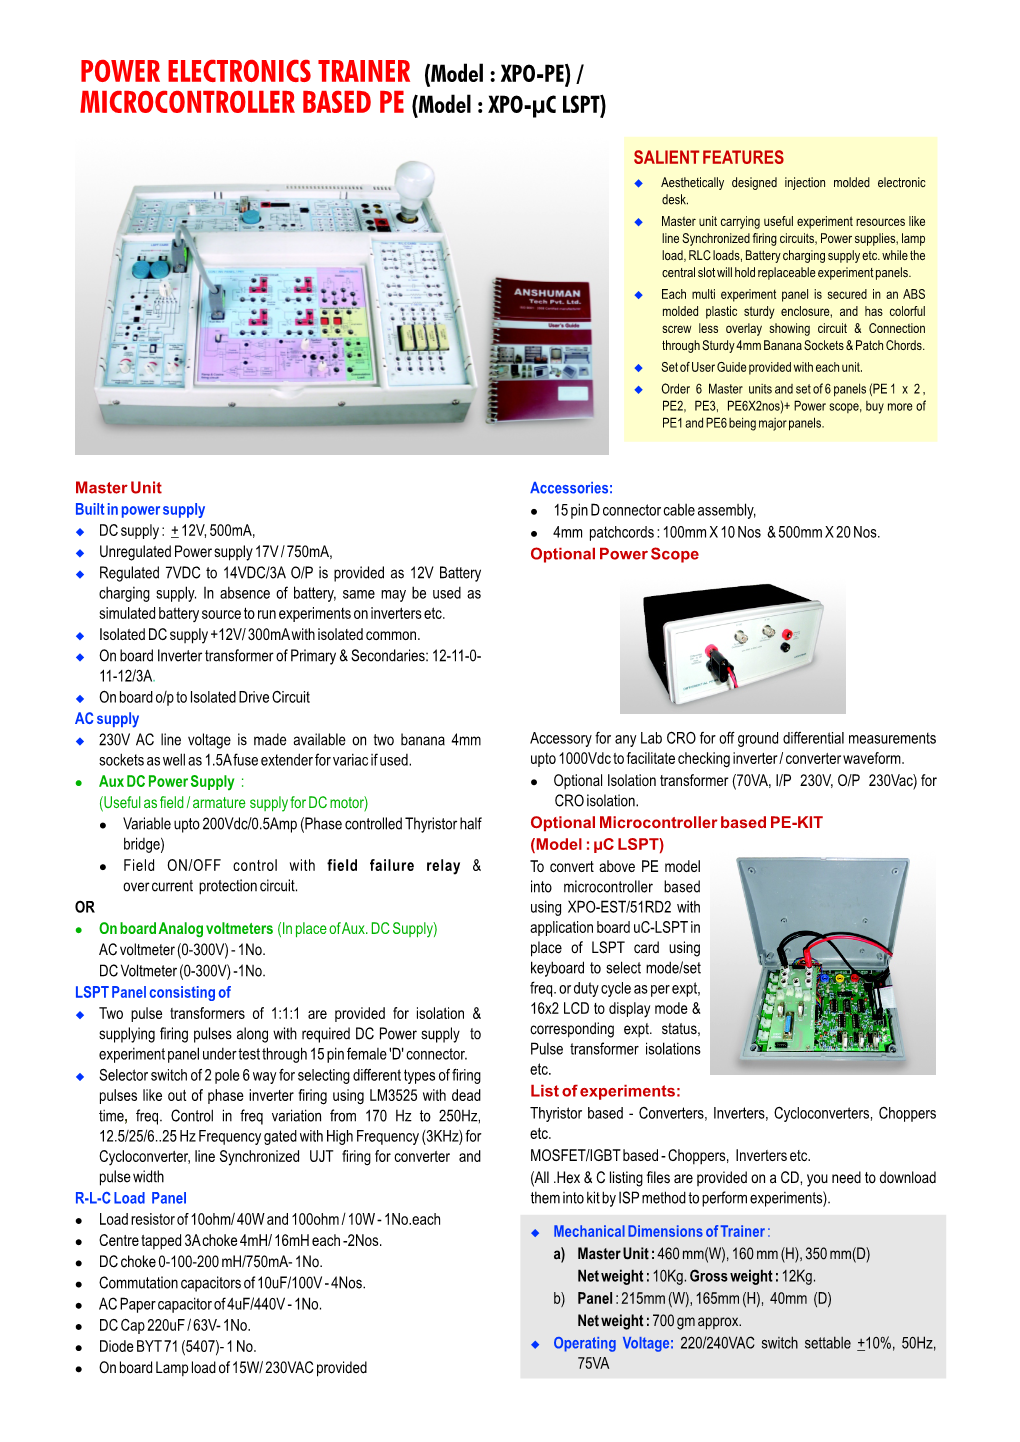 POWER ELECTRONICS TRAINER (Model : XPO-PE) / MICROCONTROLLER BASED PE (Model : XPO-Μc LSPT)